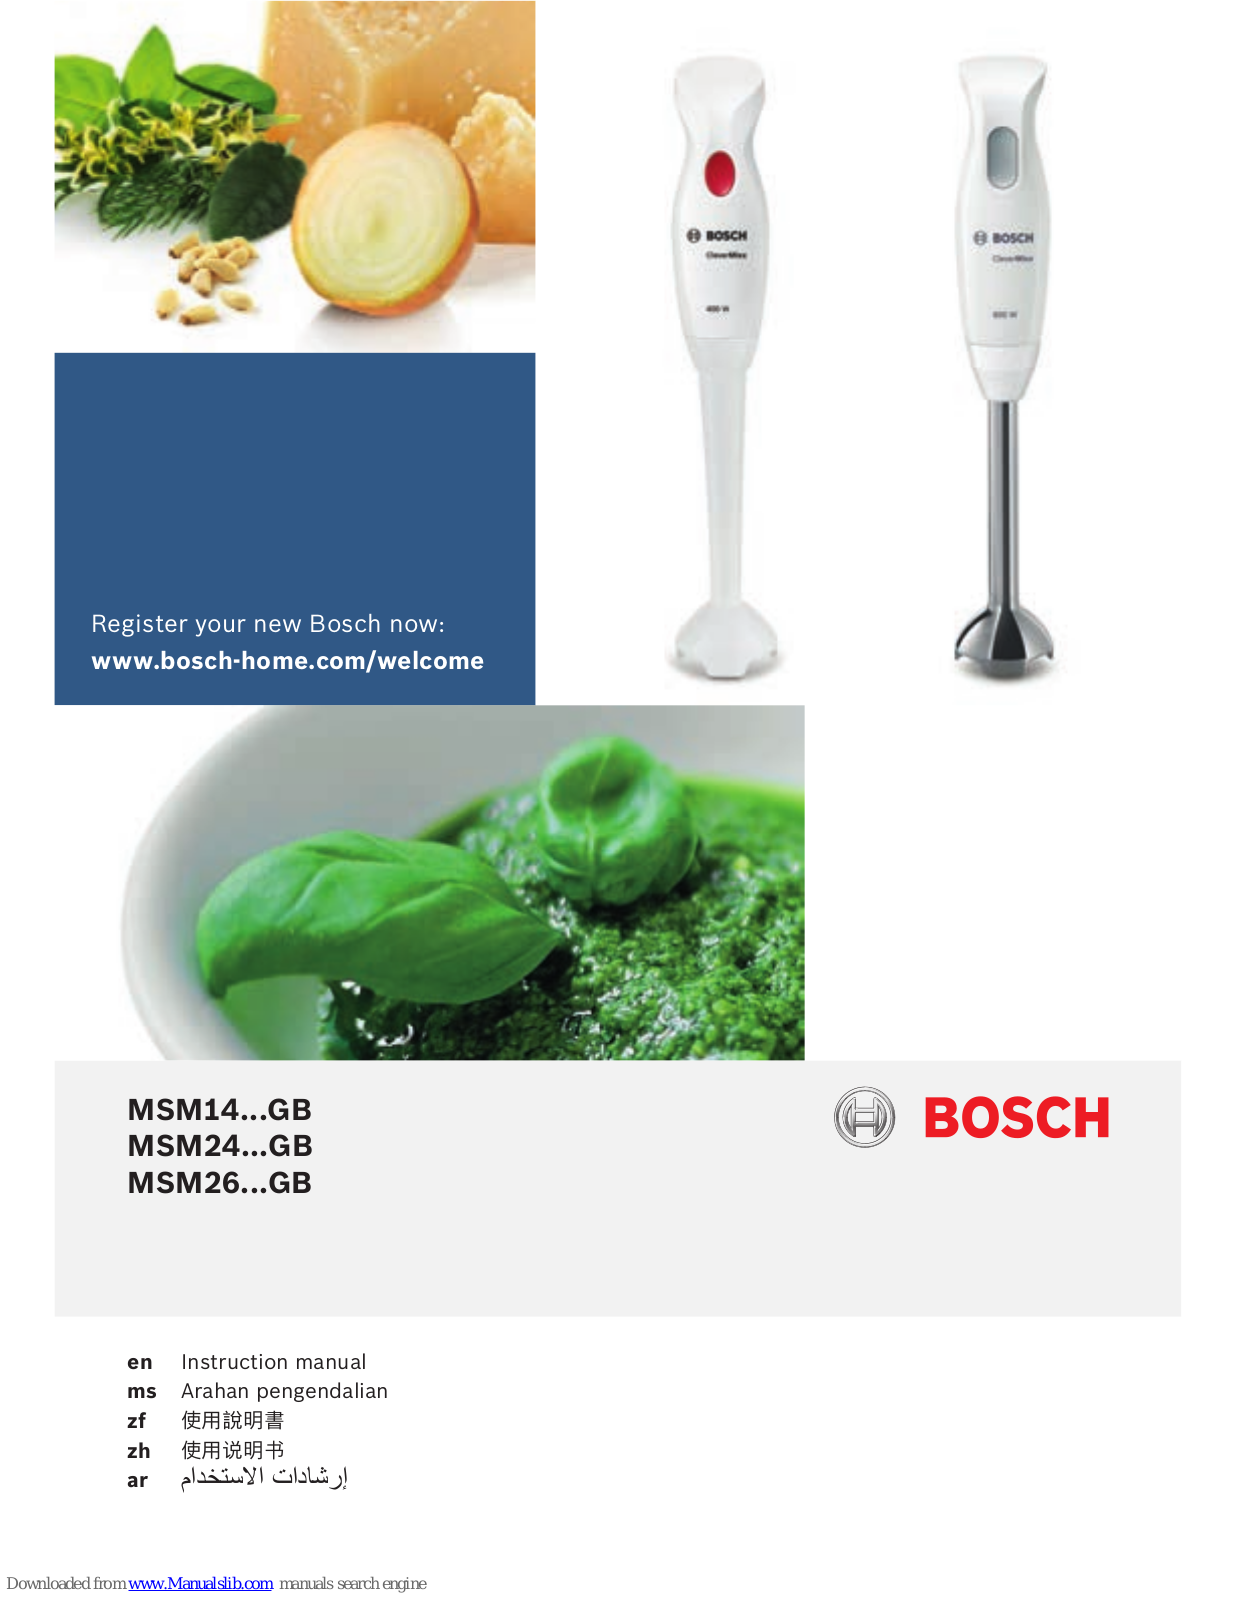 Bosch MSM14...GB, MSM24...GB, MSM26...GB Instruction Manual